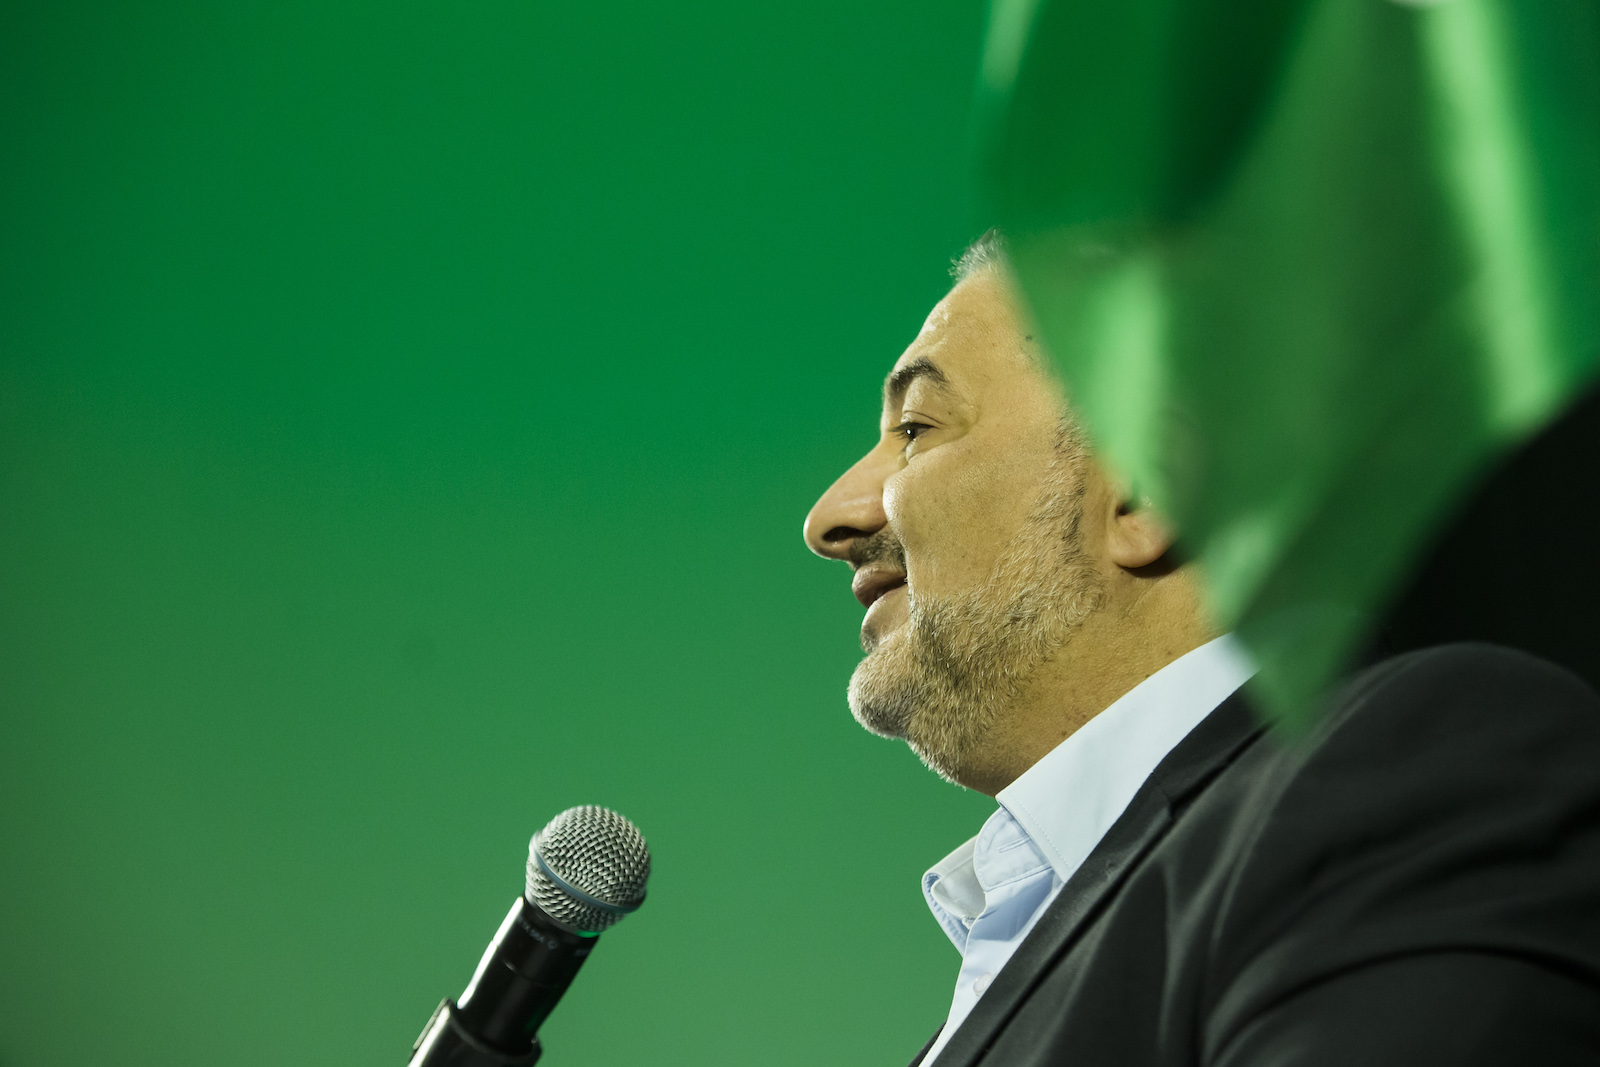 A politician giving a speech against a green backdrop